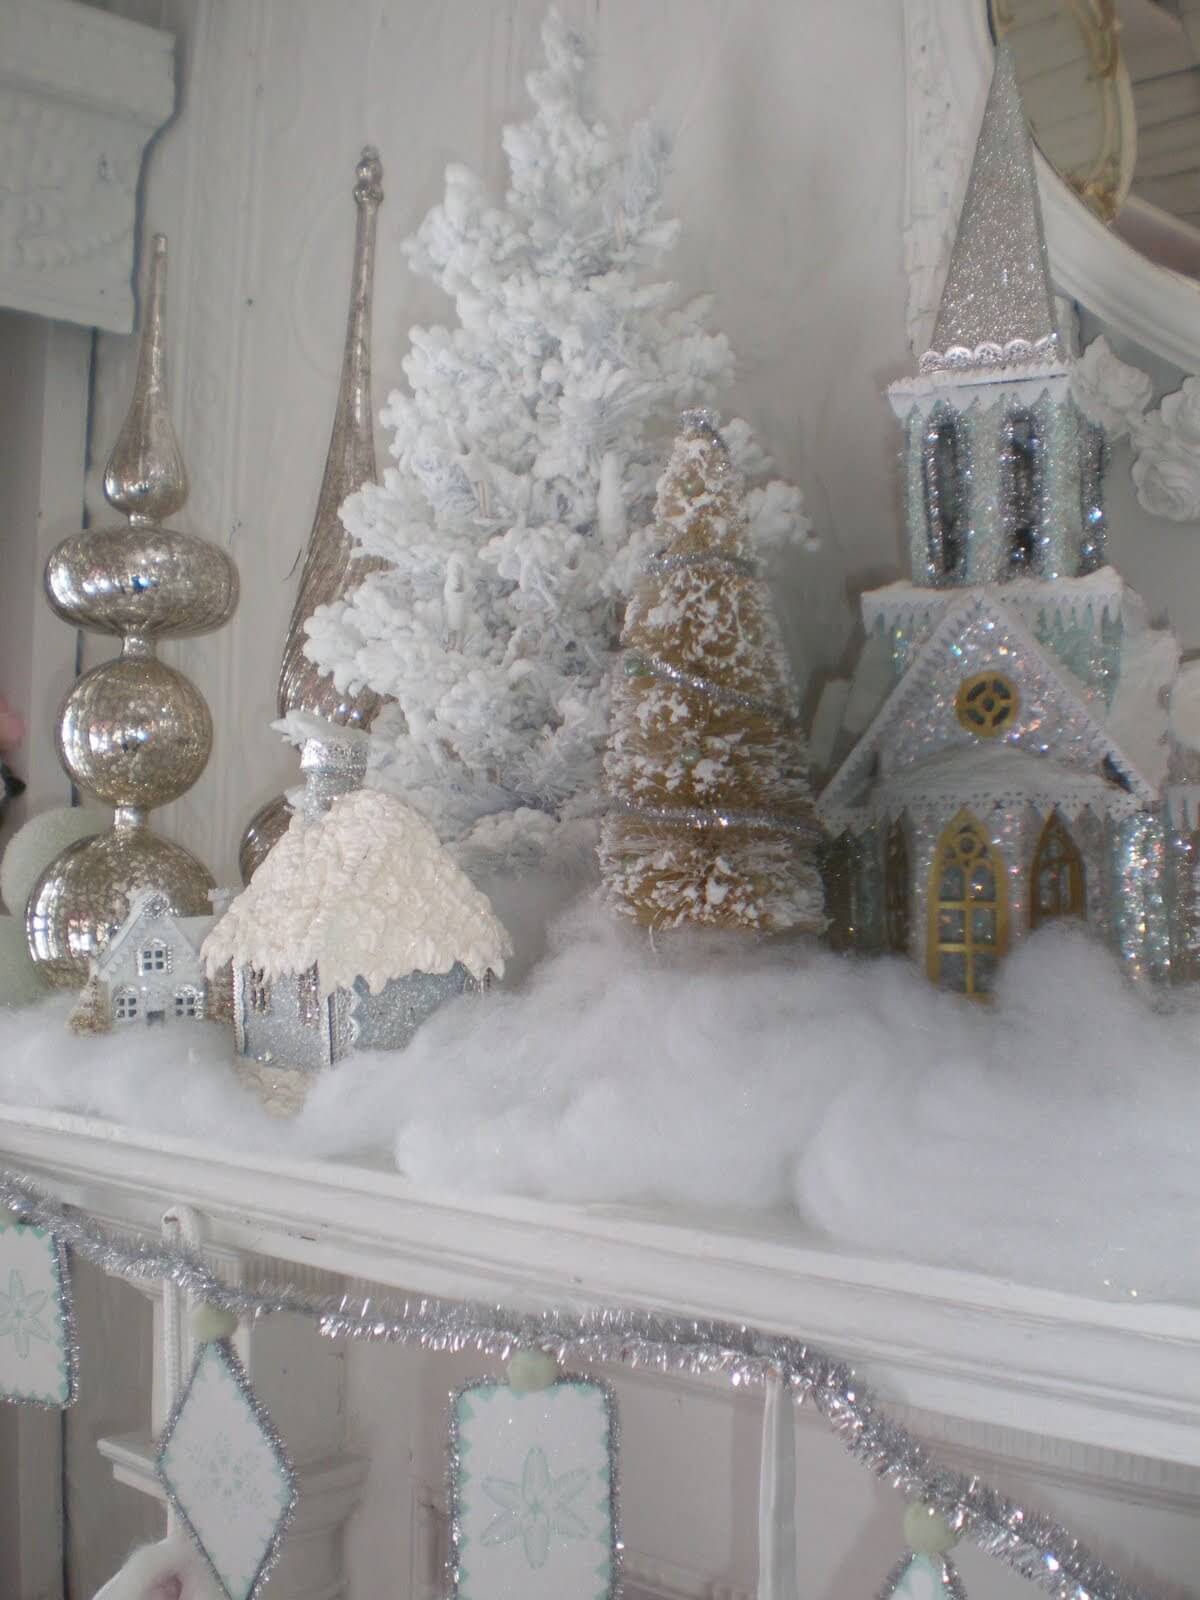 07 christmas mantel decoration ideas homebnc.jpg